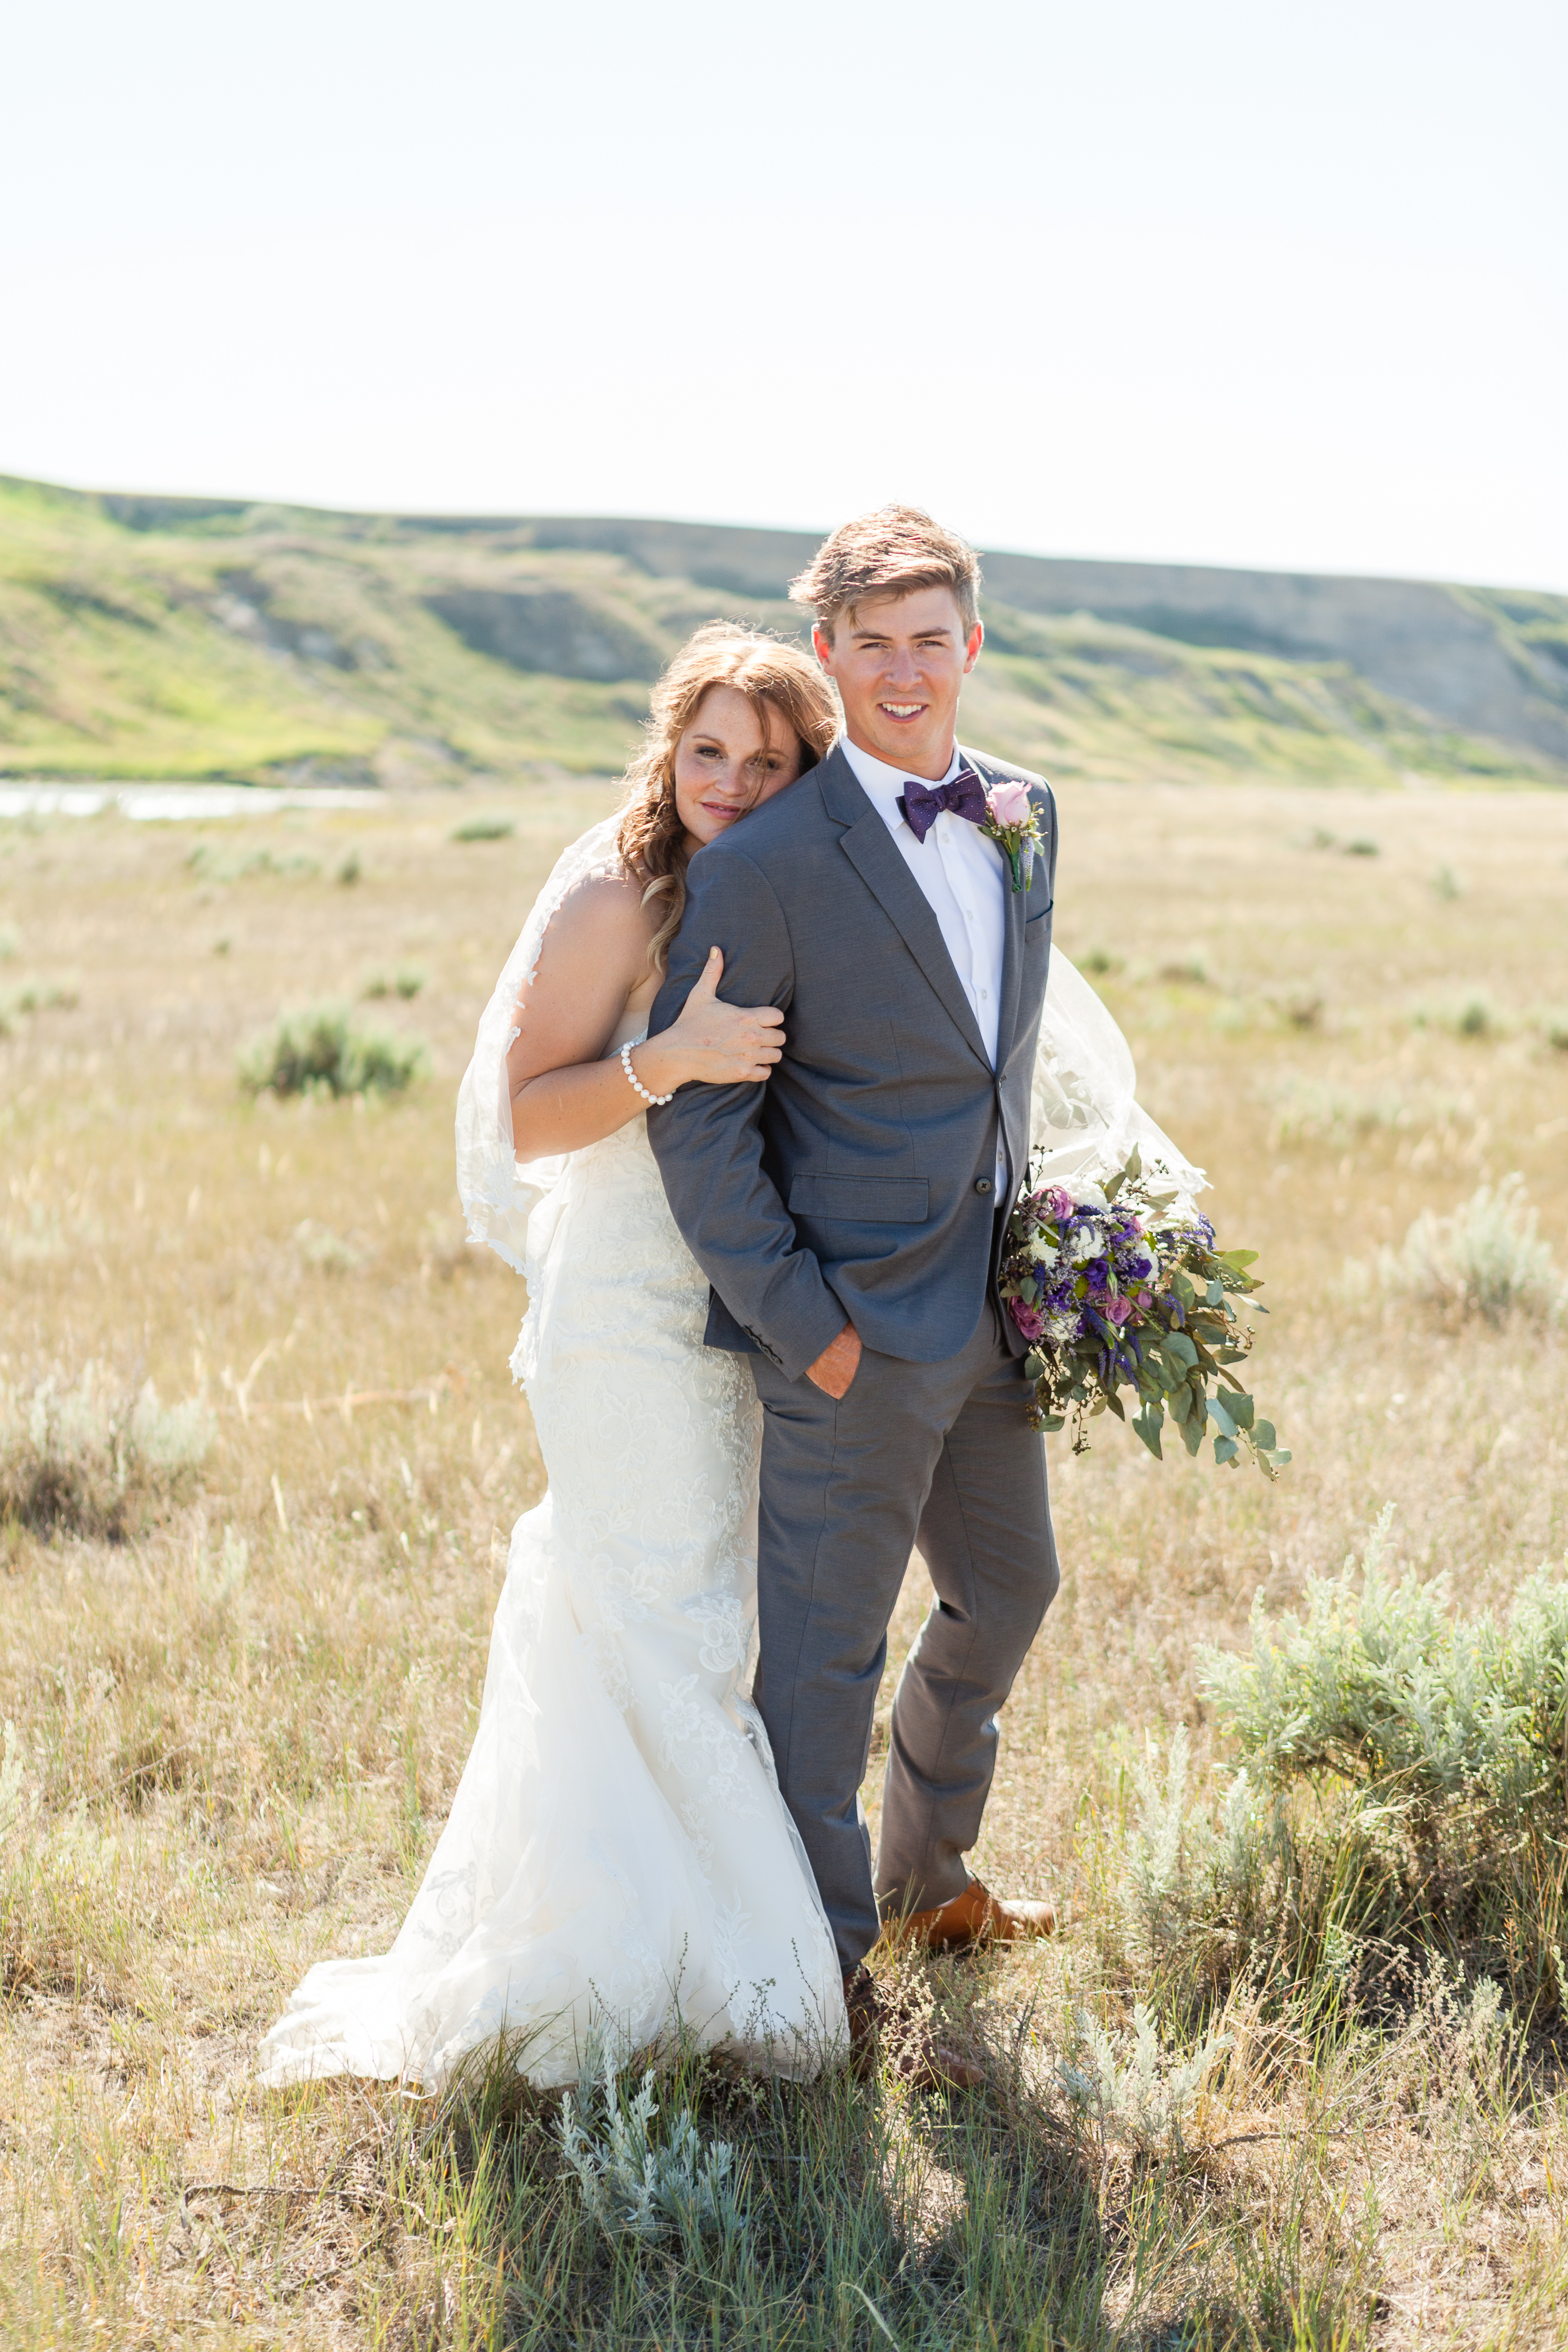 Prairie wedding by Lethbridge wedding photographer Kinsey Holt Photography